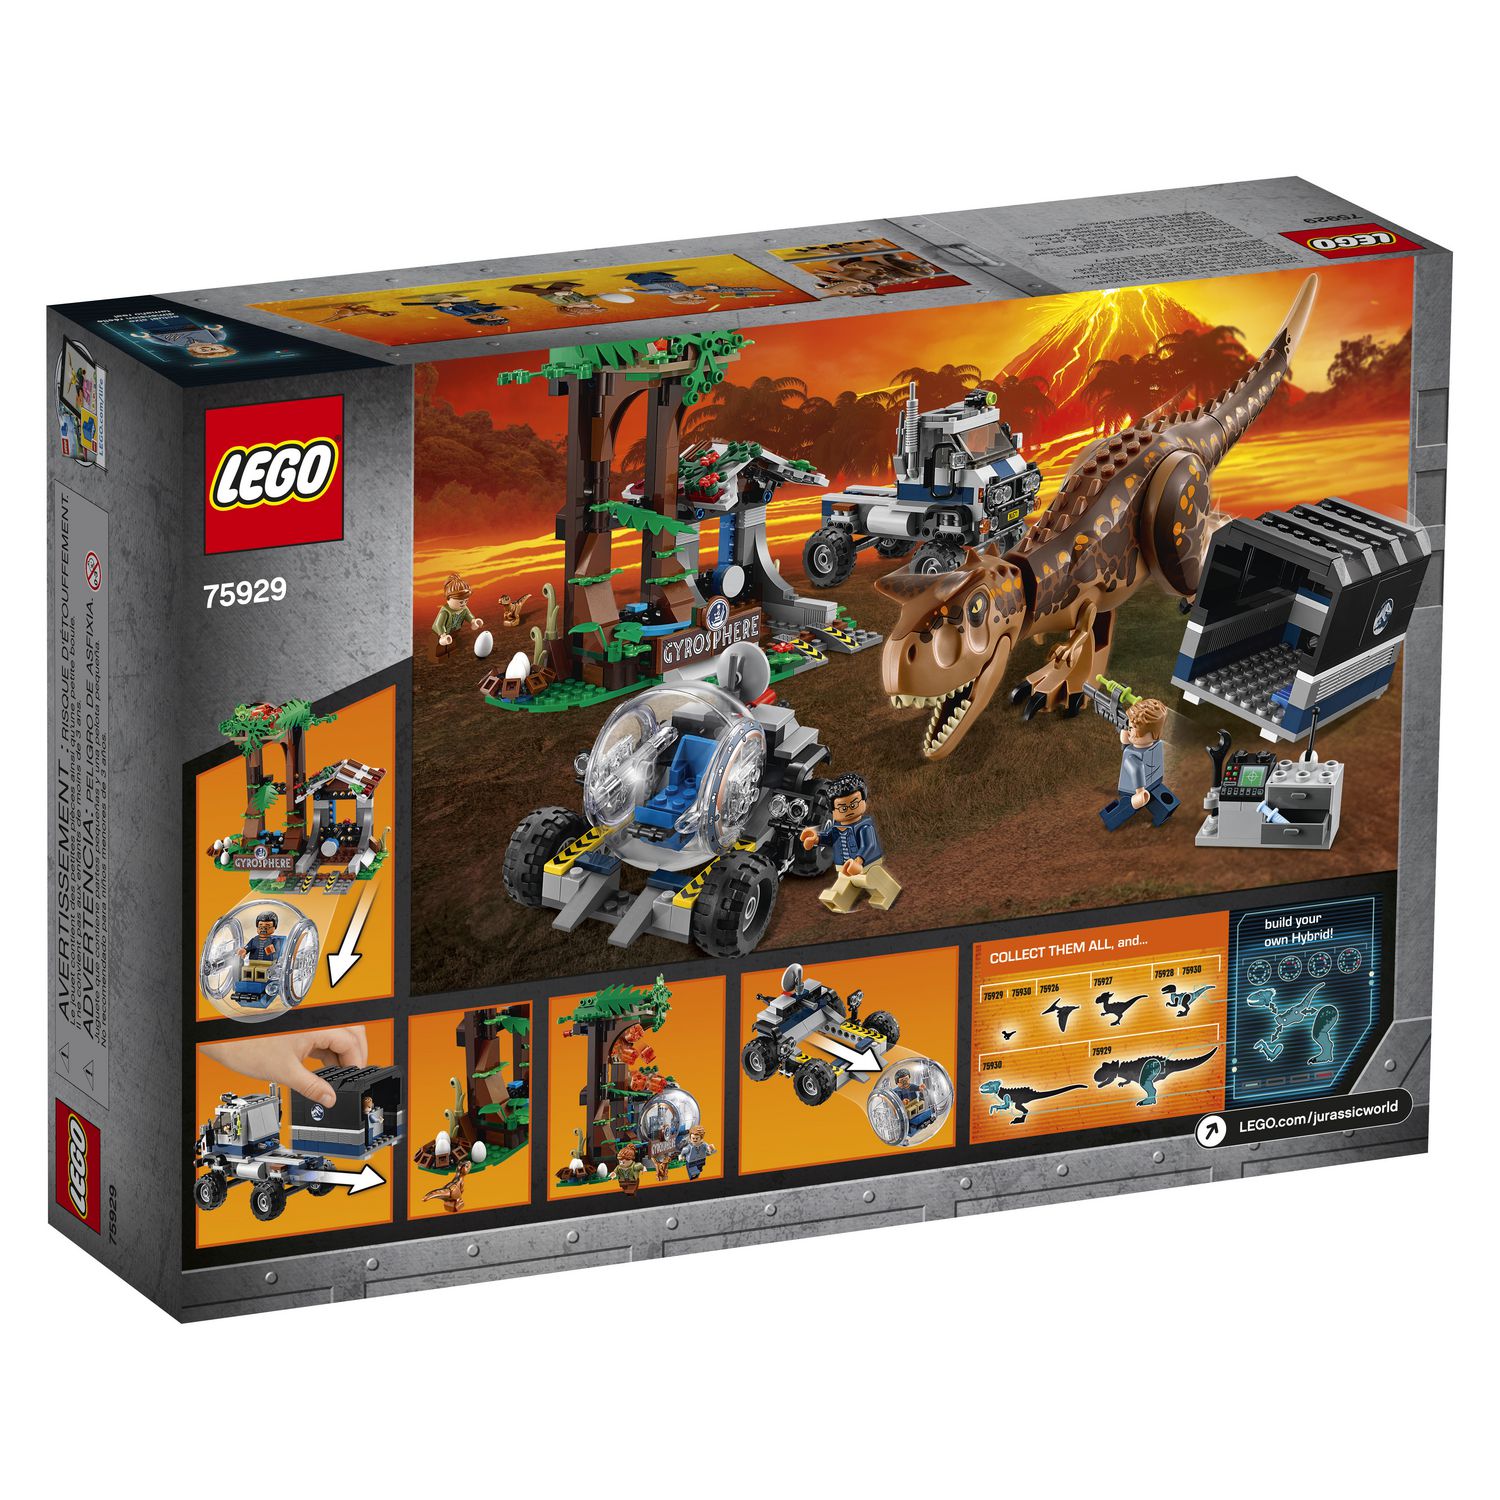 LEGO Jurassic World Carnotaurus Gyrosphere Escape 75929 Toy